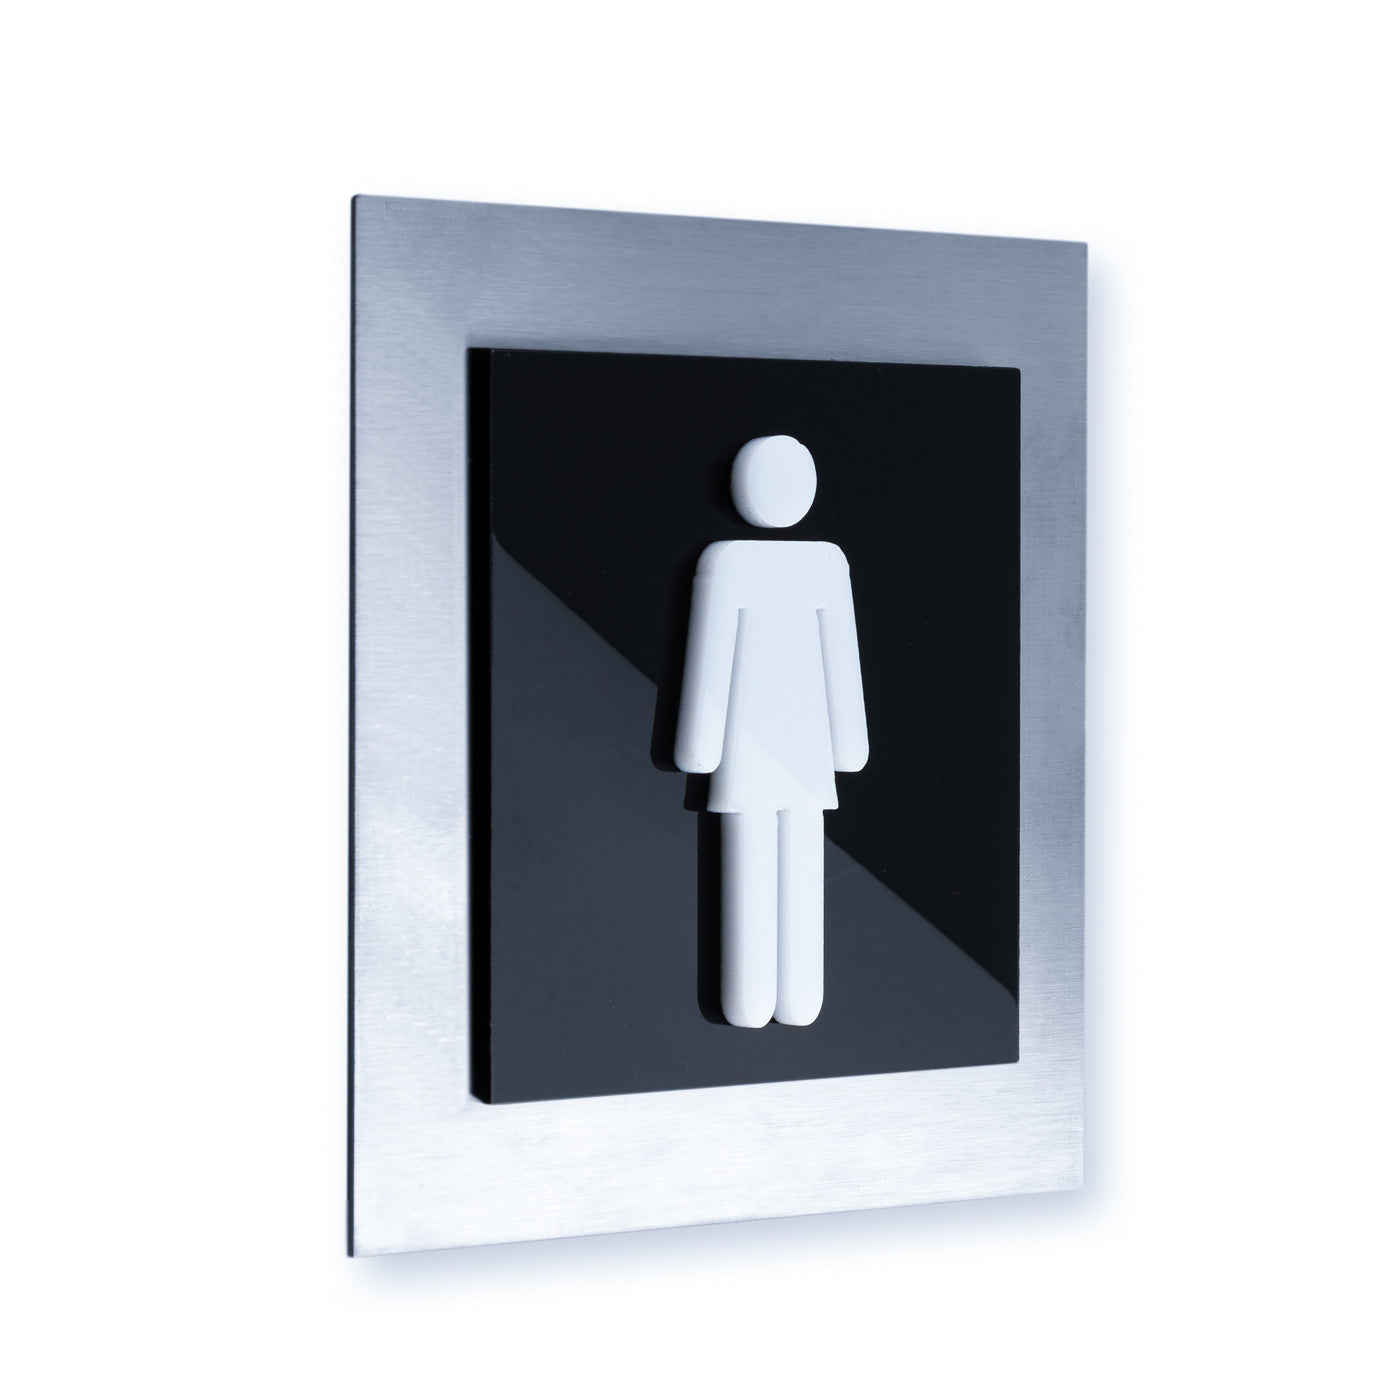 Steel Women Restroom Signs Bathroom Signs black / white pictogram Bsign